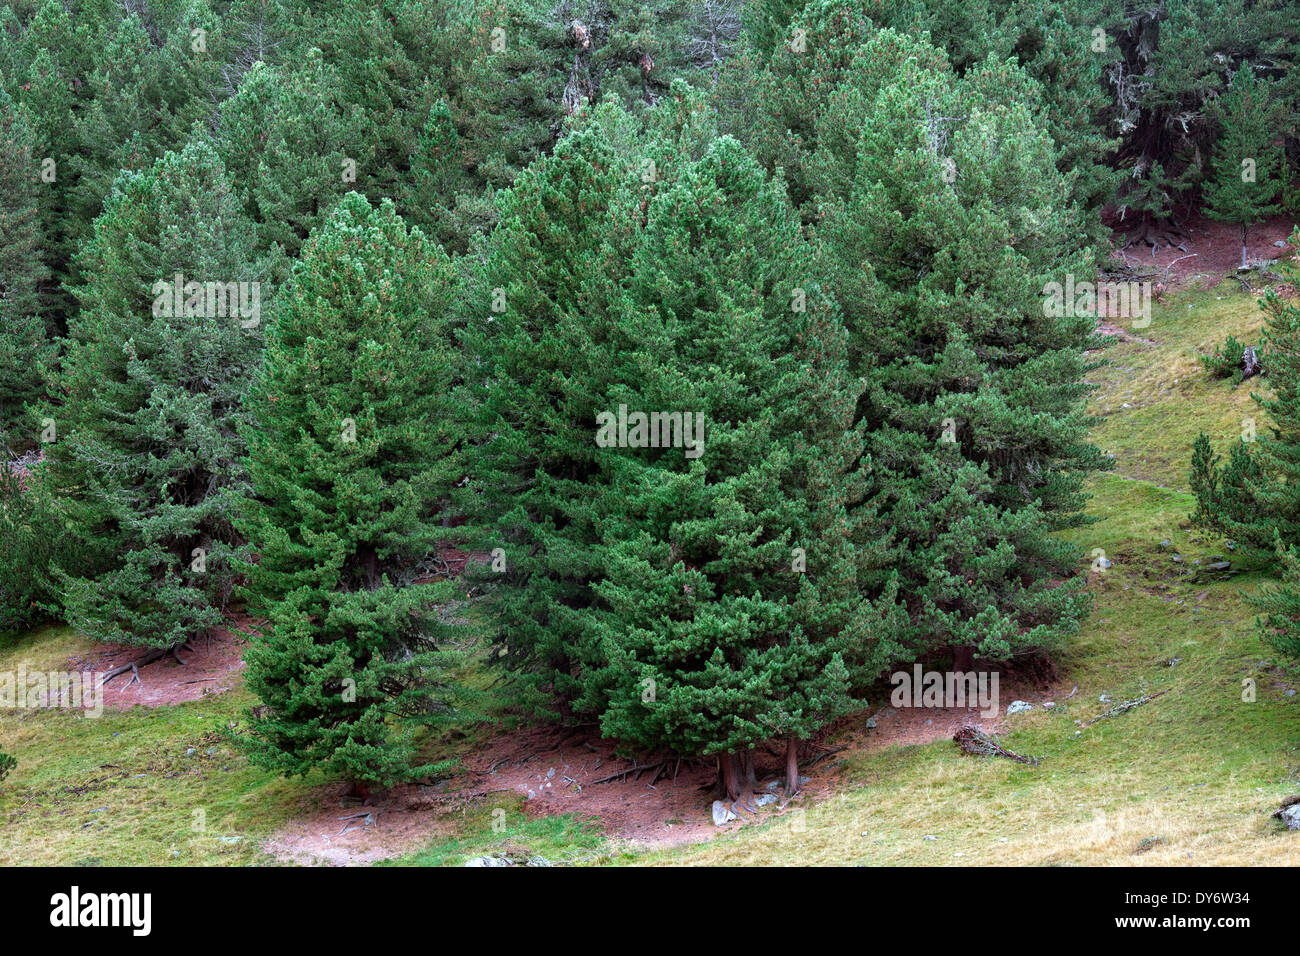 Swiss pines / Swiss stone pine / Arolla pine (Pinus cembra) growing on mountain slope in the Swiss Alps, Switzerland Stock Photo